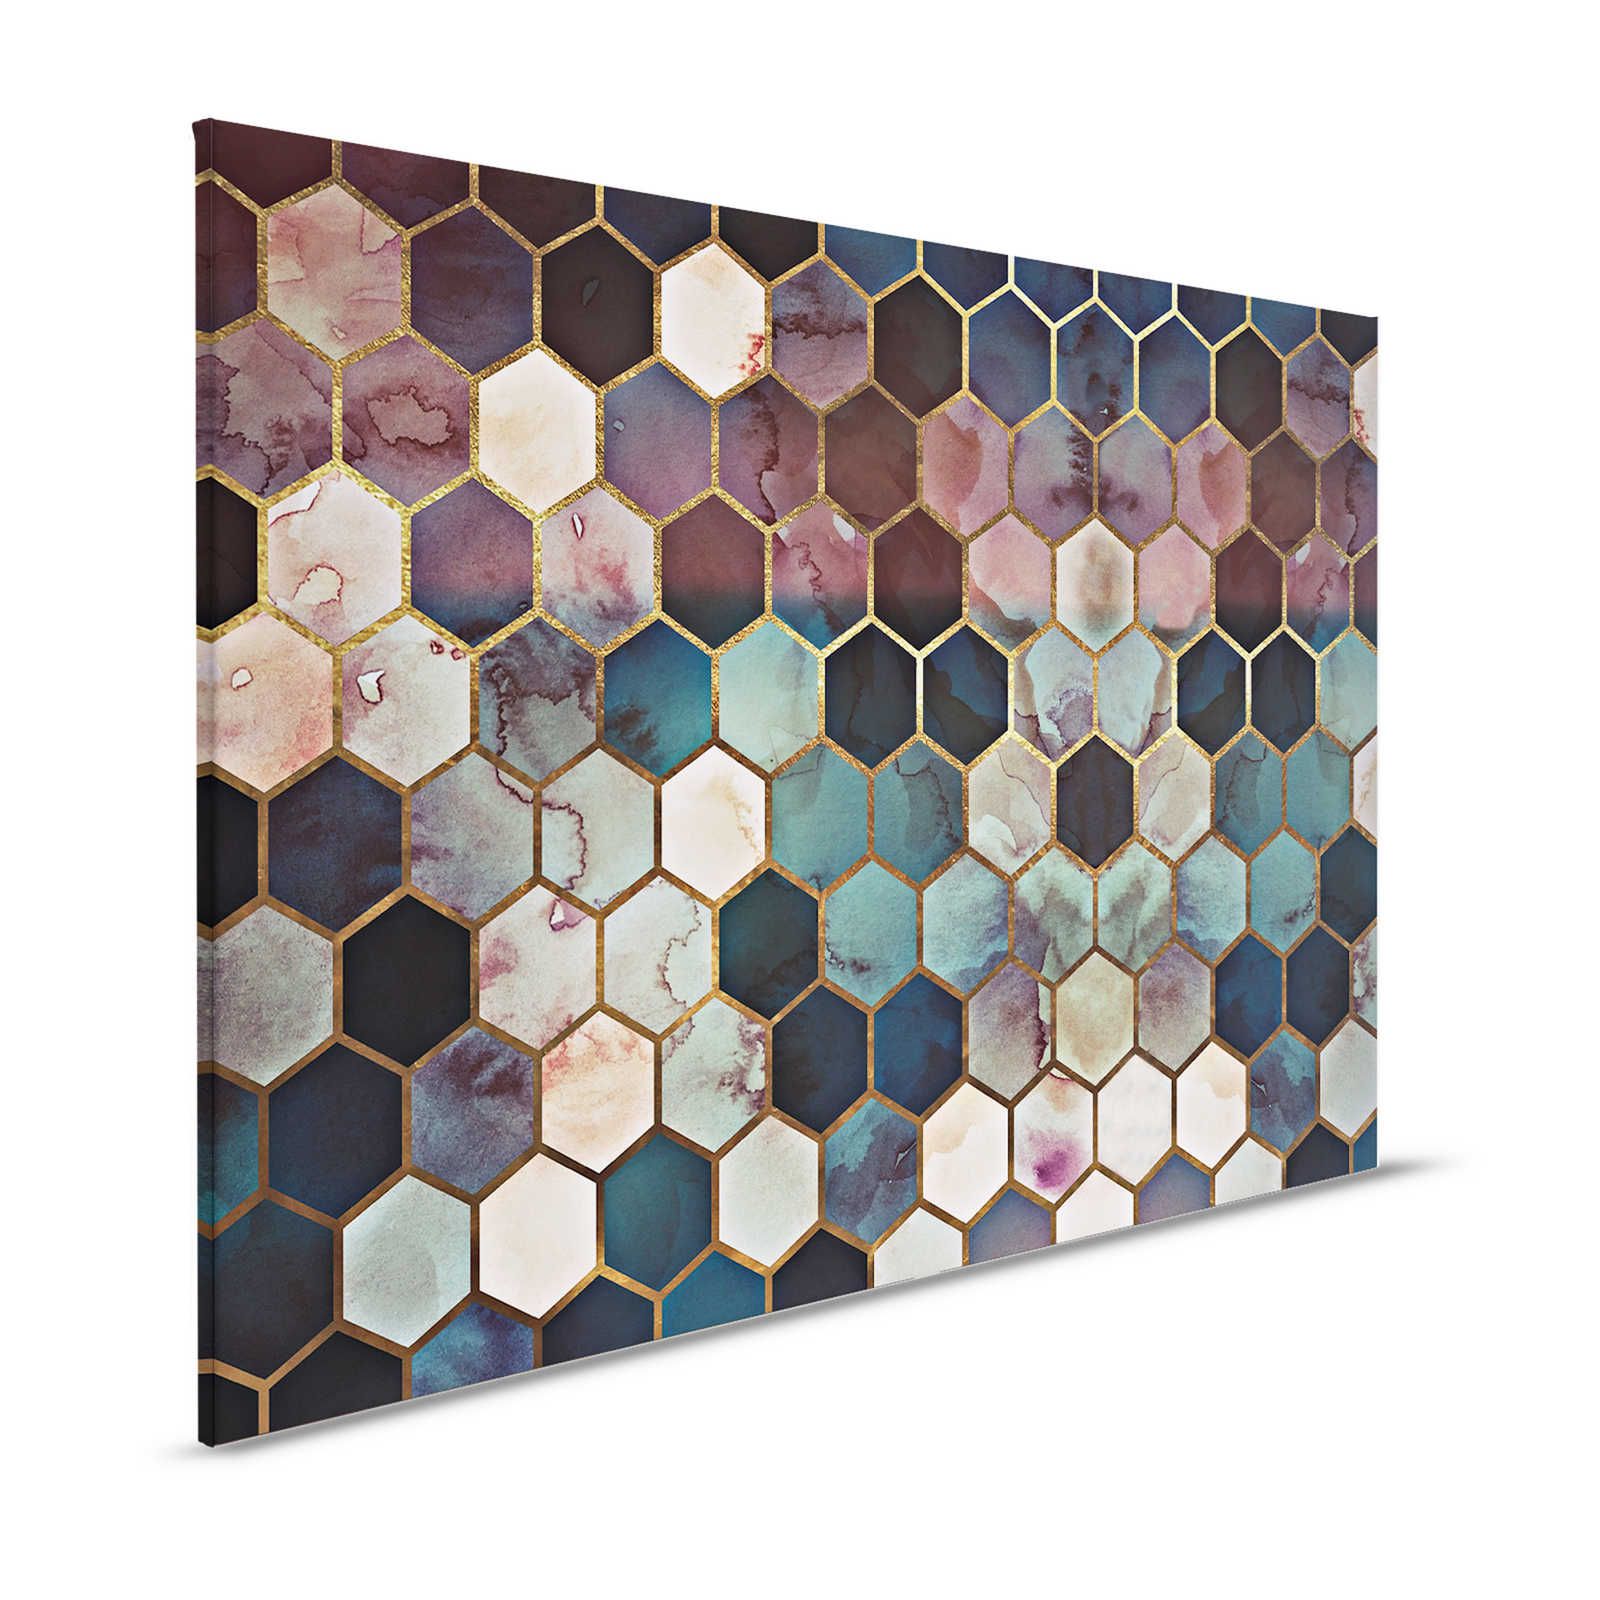         Aquarell Leinwandbild Marmor Design mit Gold Muster – 1,20 m x 0,80 m
    